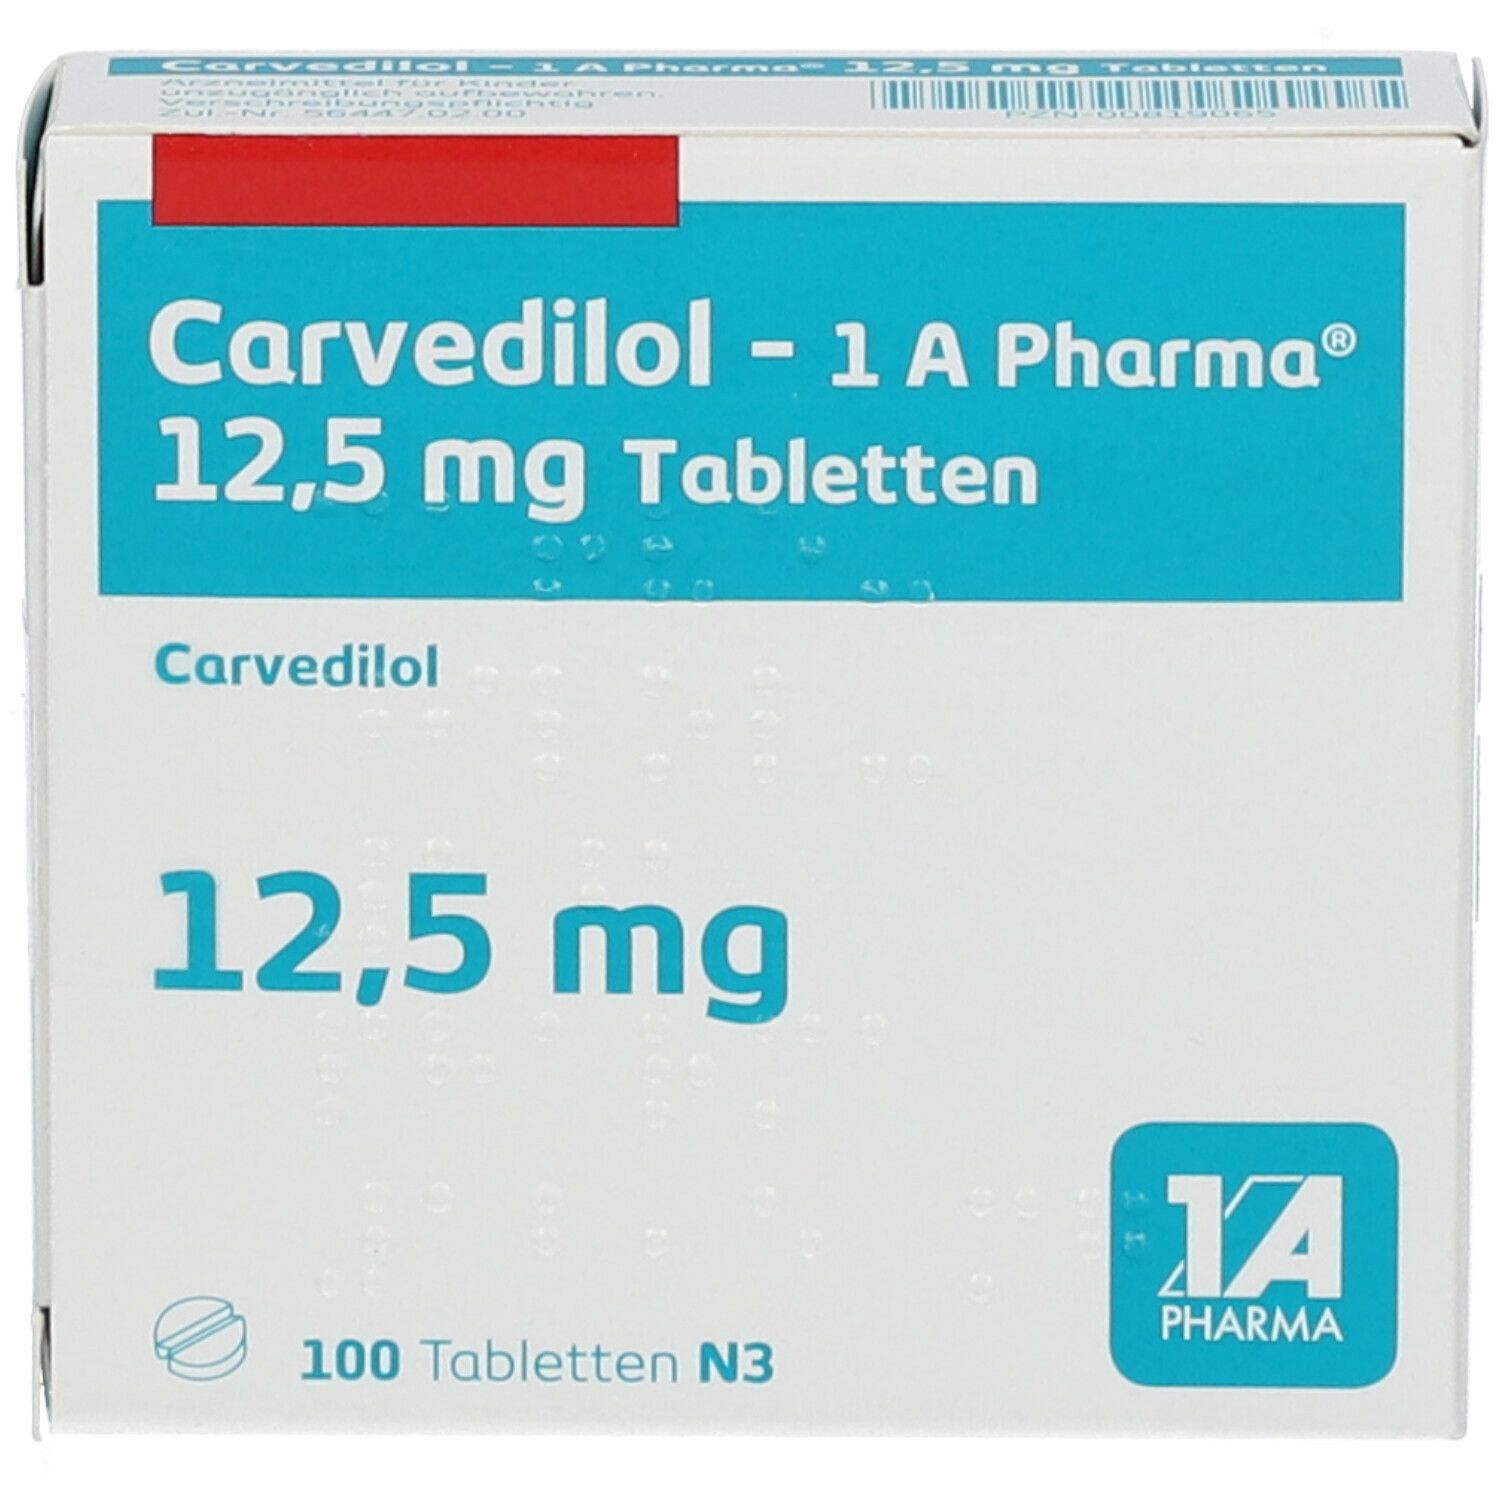 Carvedilol 1A Pharma® 12.5